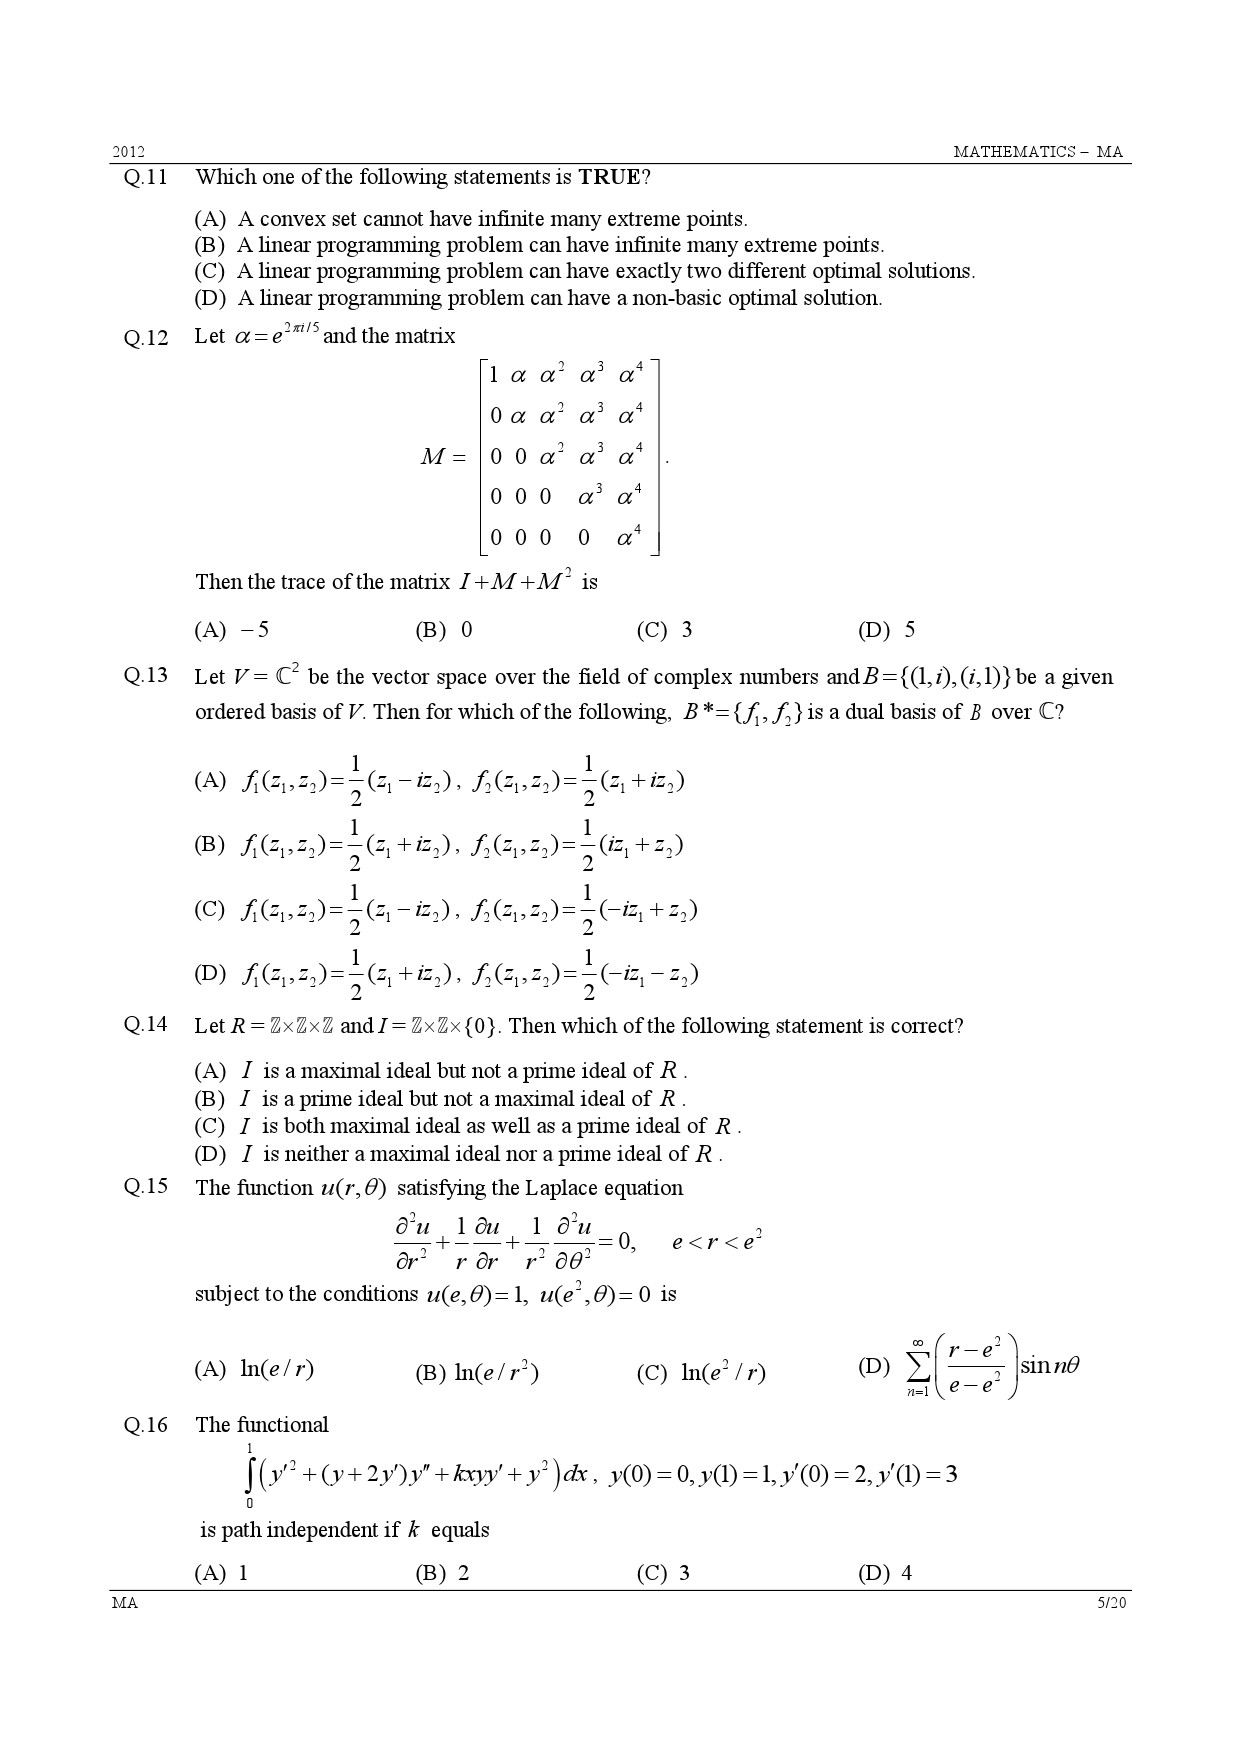 GATE Exam Question Paper 2012 Mathematics 5